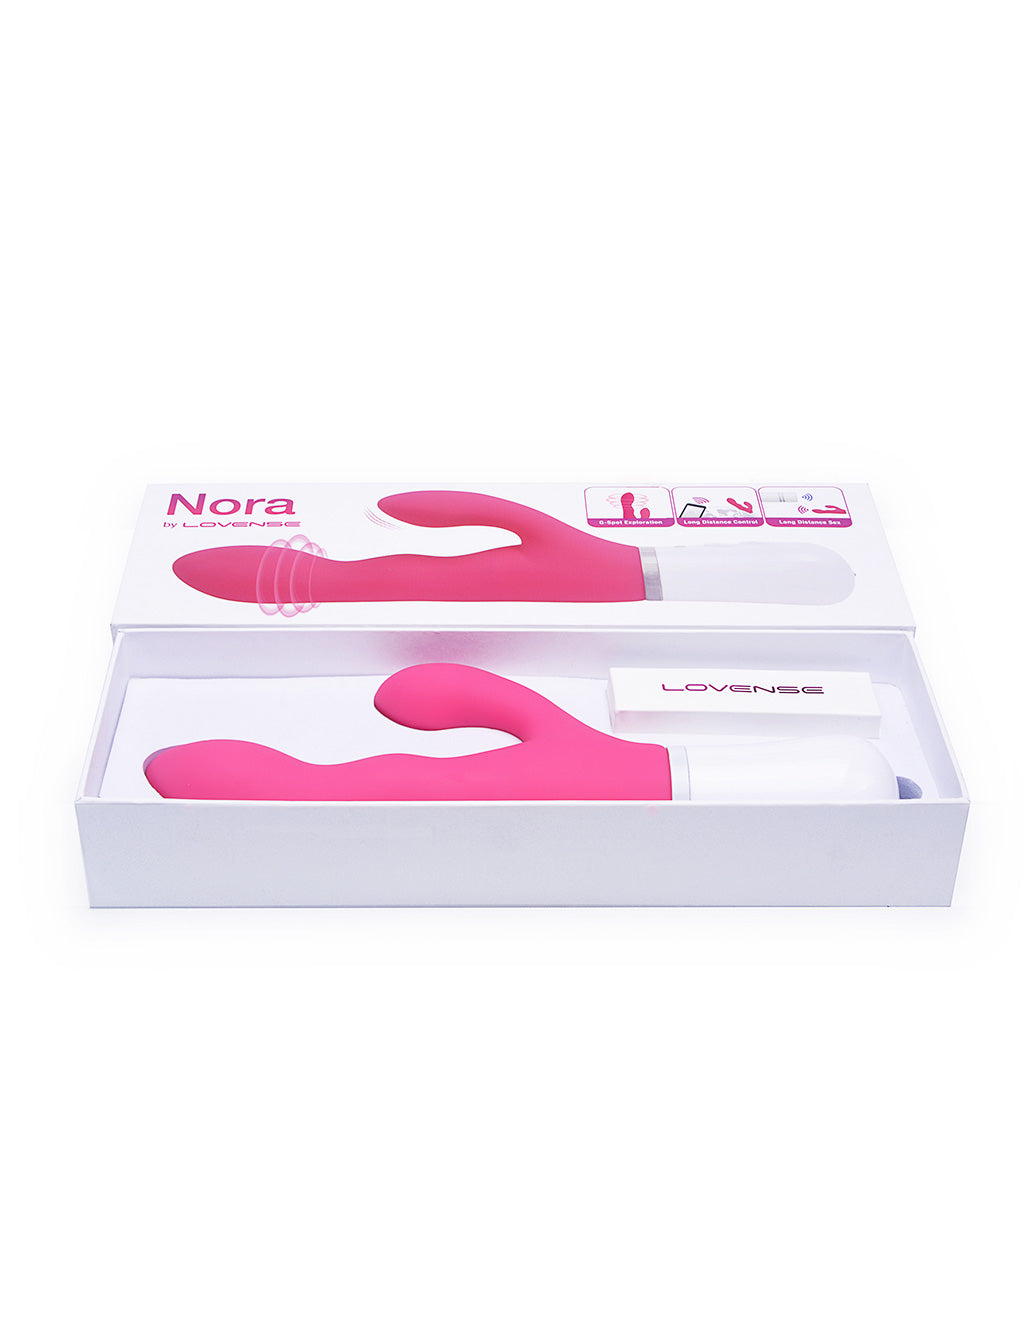 Lovense Nora Bluetooth Remote Control Rabbit Vibrator - Novelties - Dual/Multi